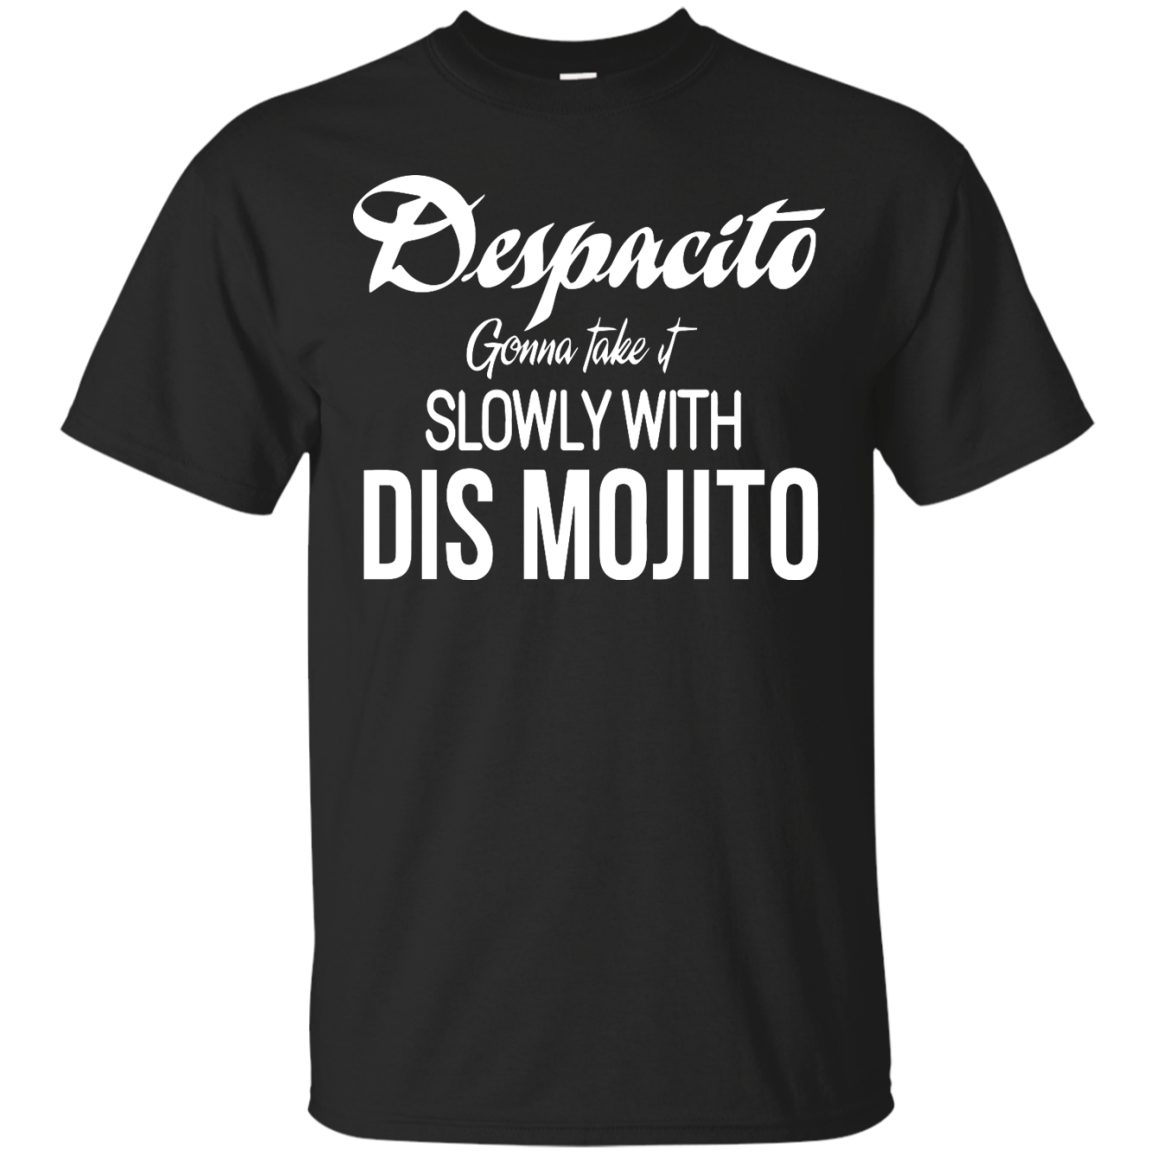 Despacito gonna take it slowly with dis mojito shirt, long sleeve